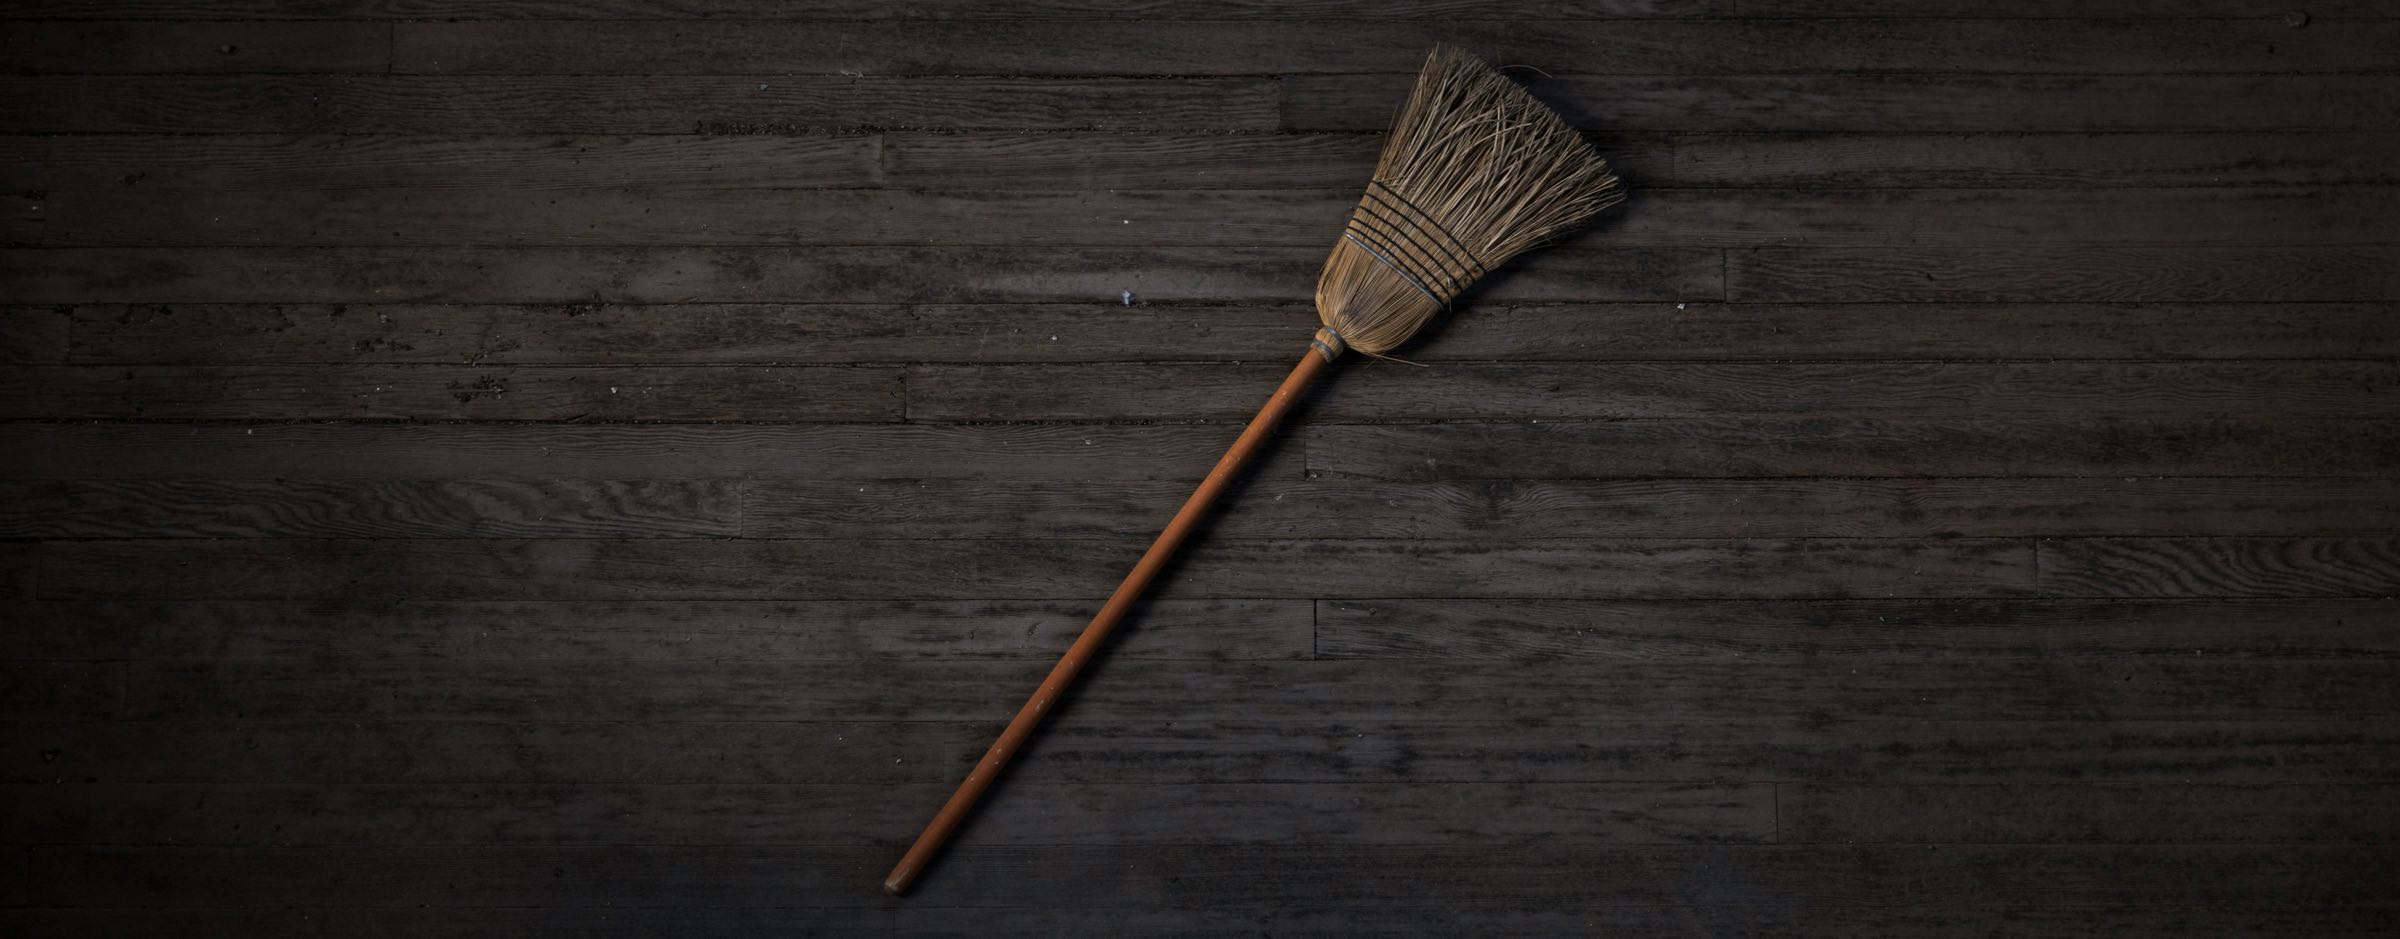 A broom